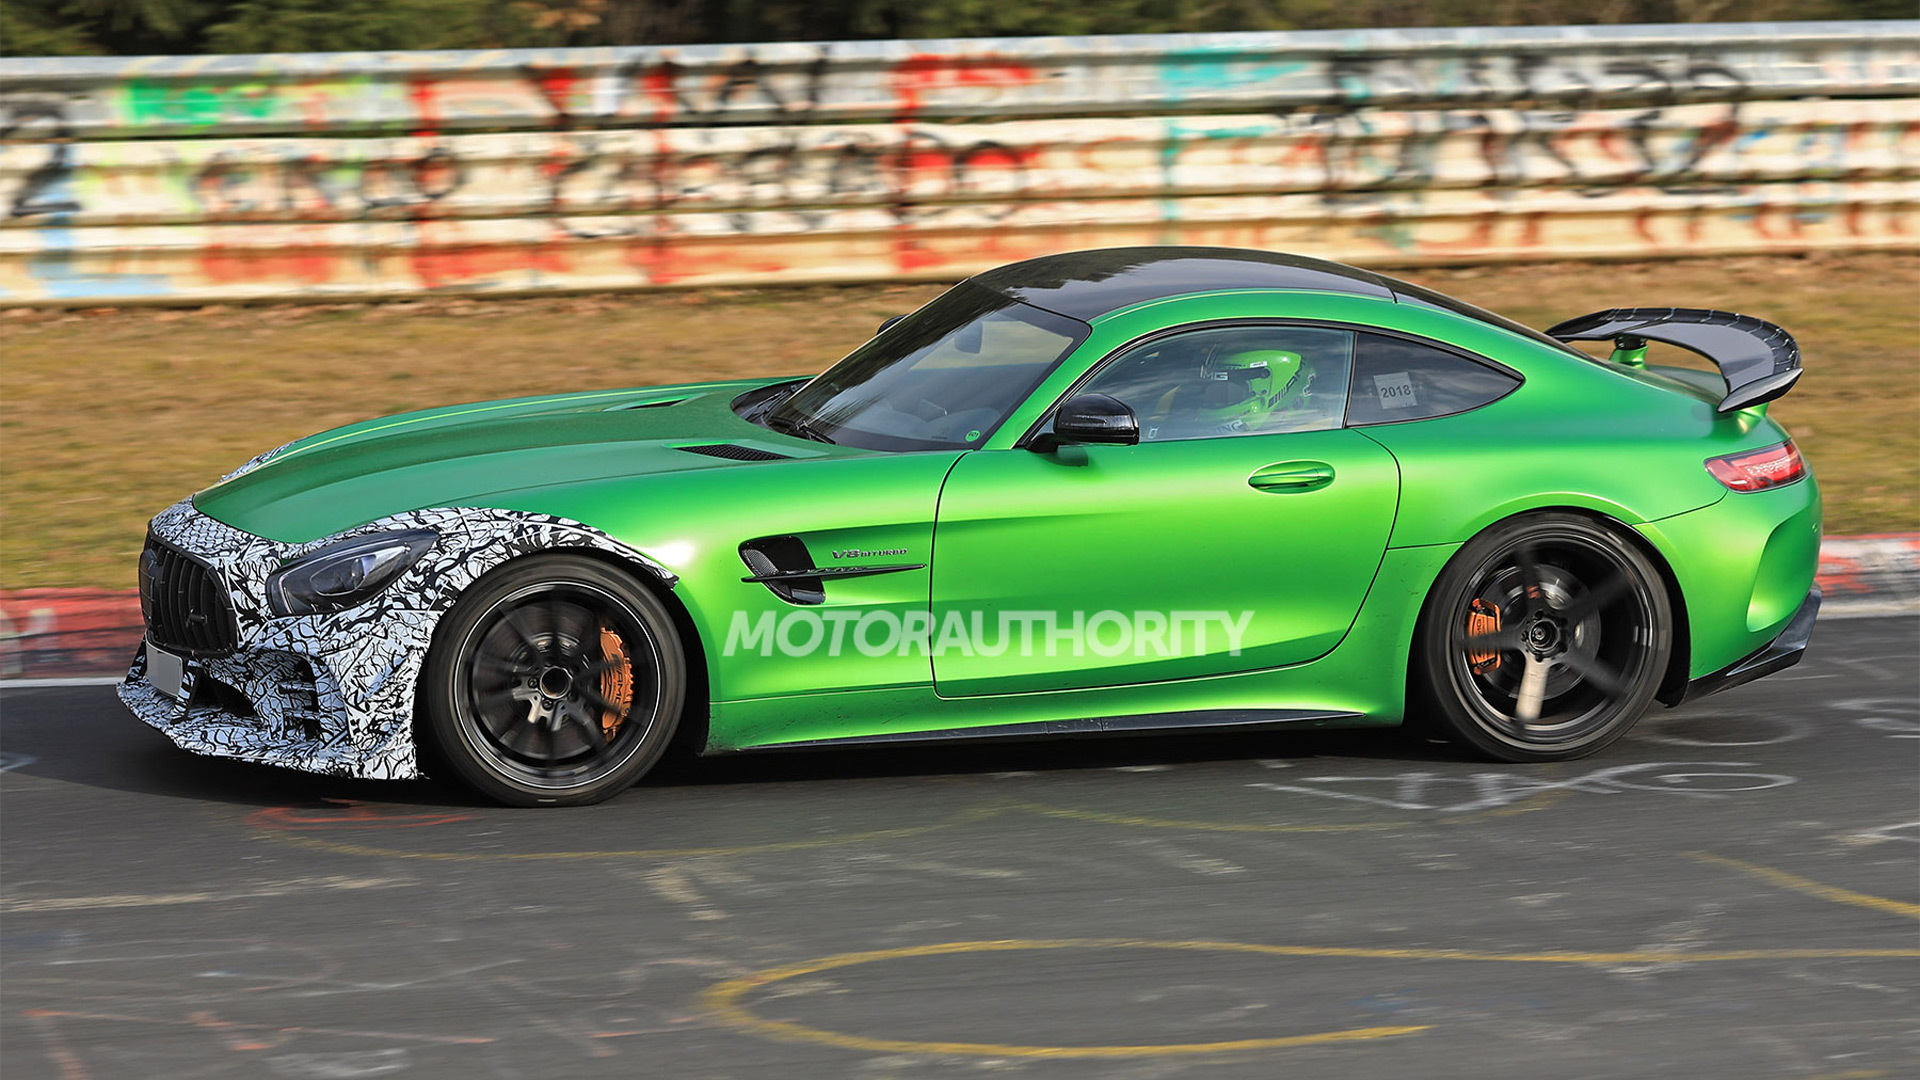 2020 Mercedes-AMG GT R 'Clubsport' spy shots - Image via S. Baldauf/SB-Medien